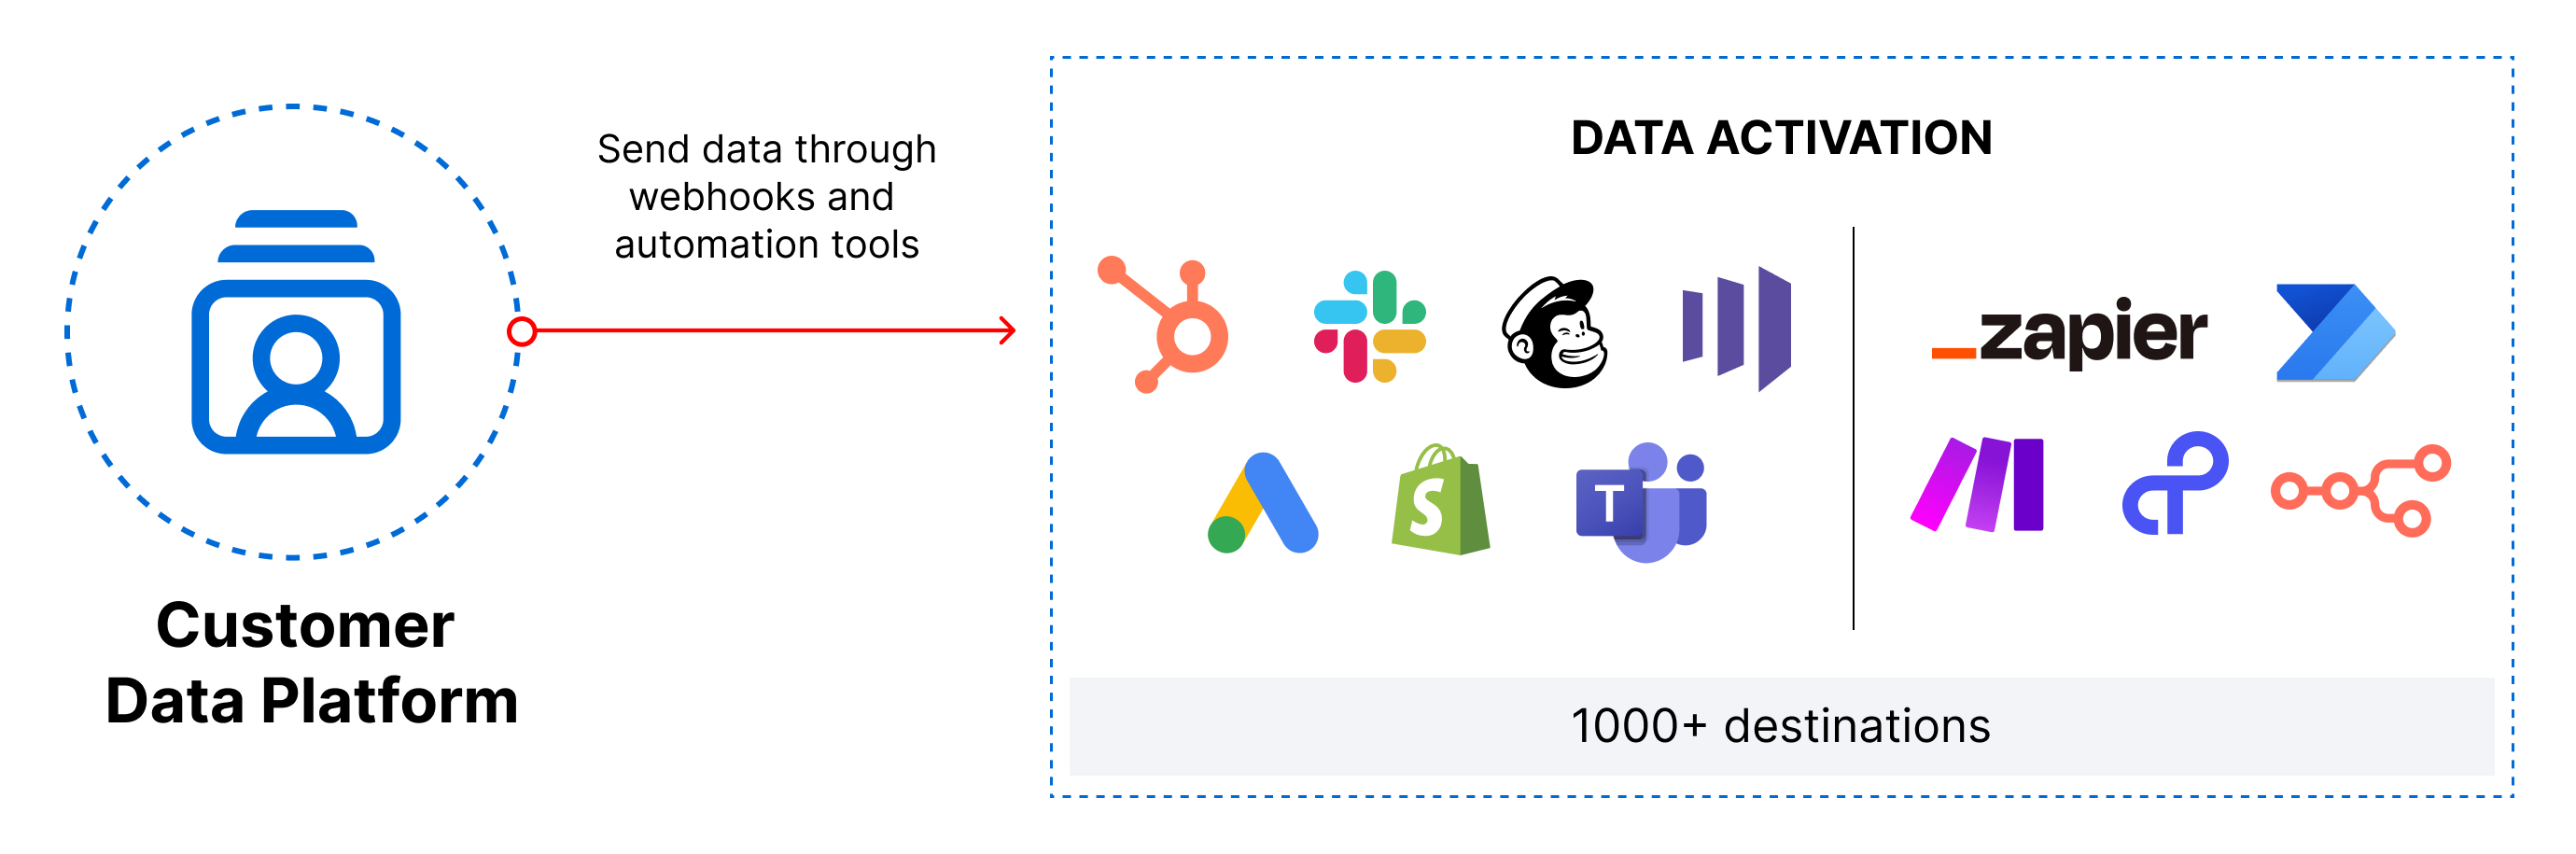 data activation diagram